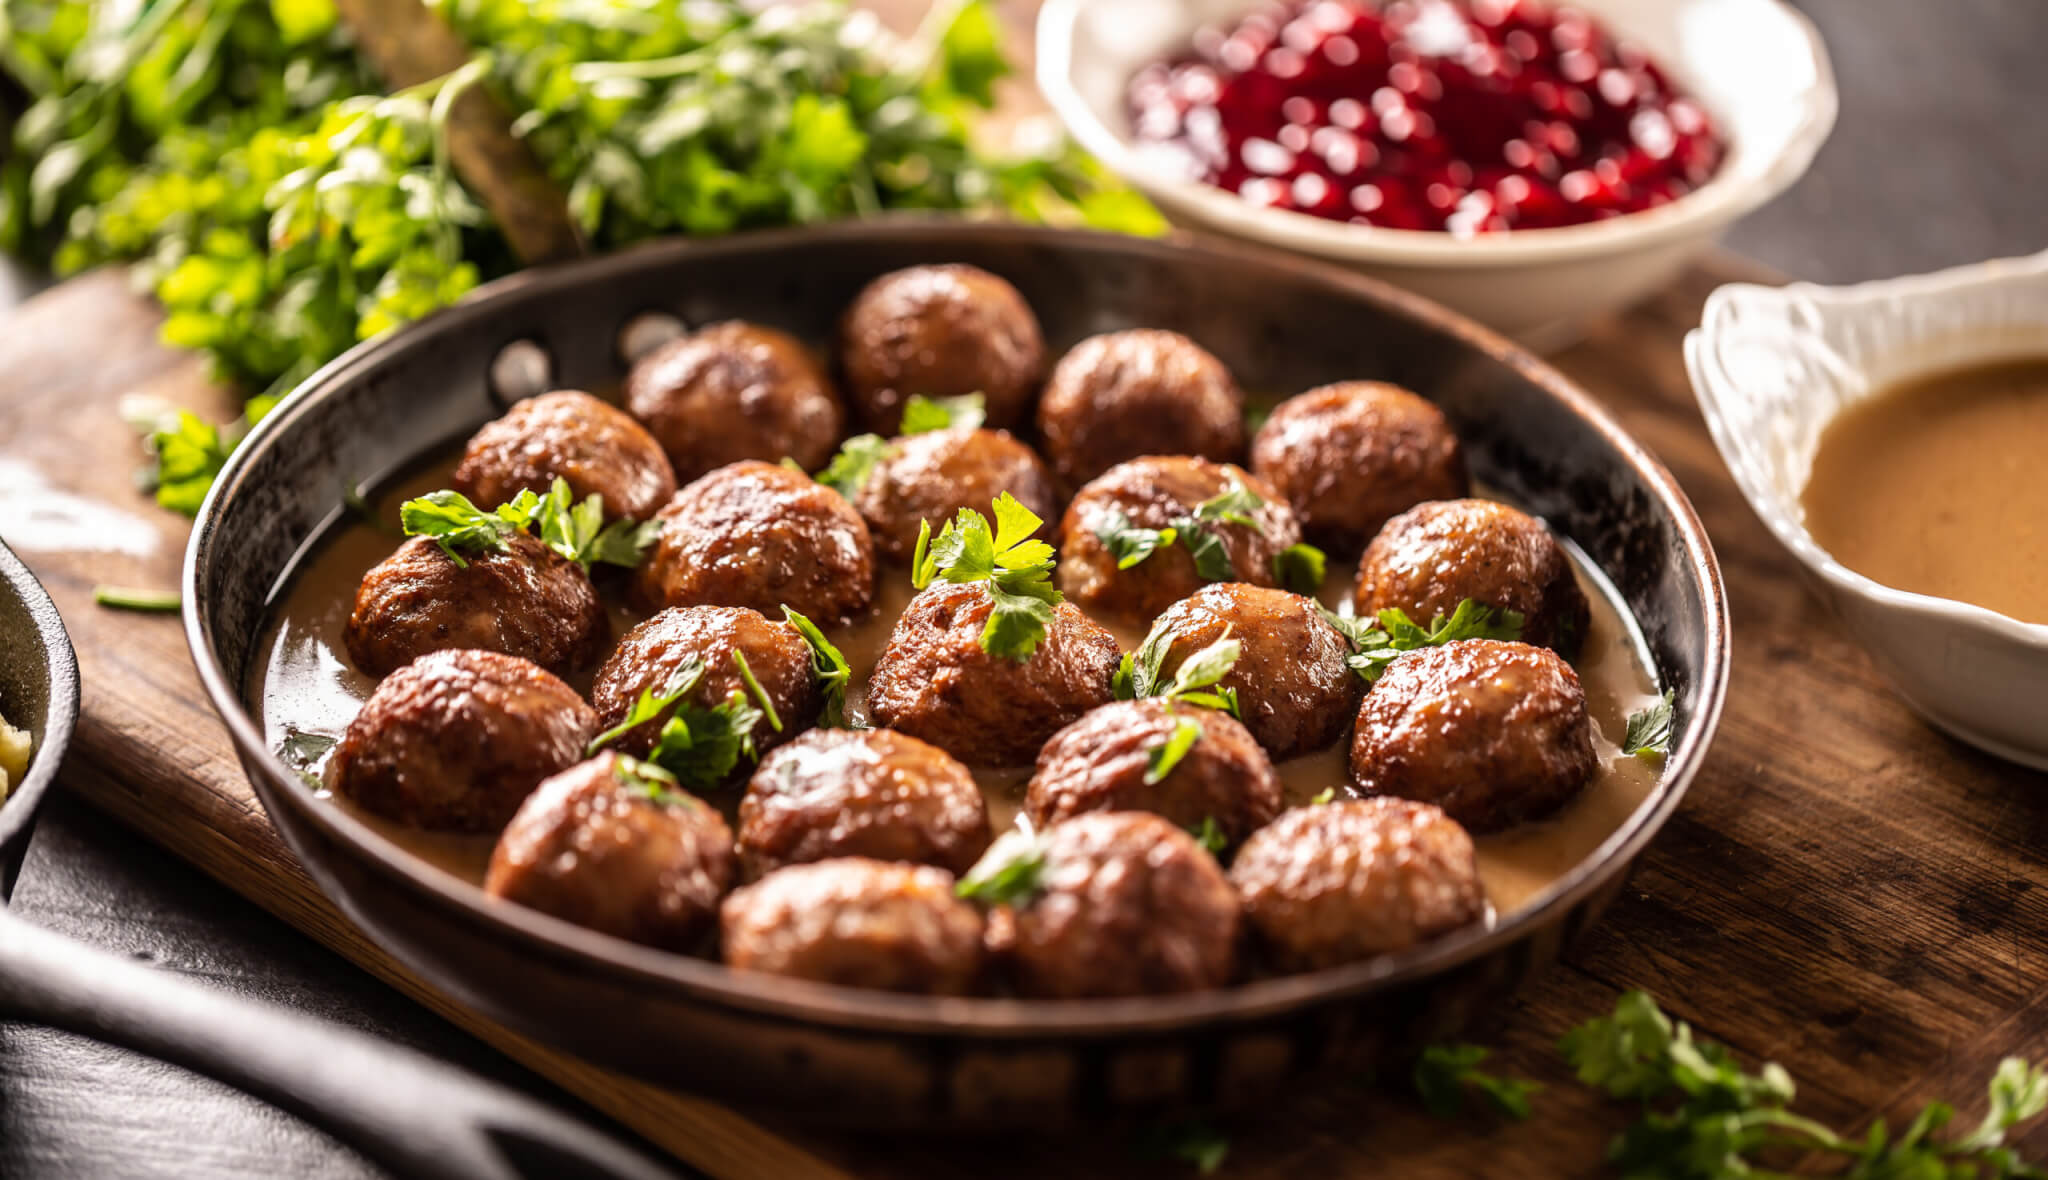 Dinner in Minutes: 7 BEST Frozen Meatballs That Taste Like Grandma Made ...